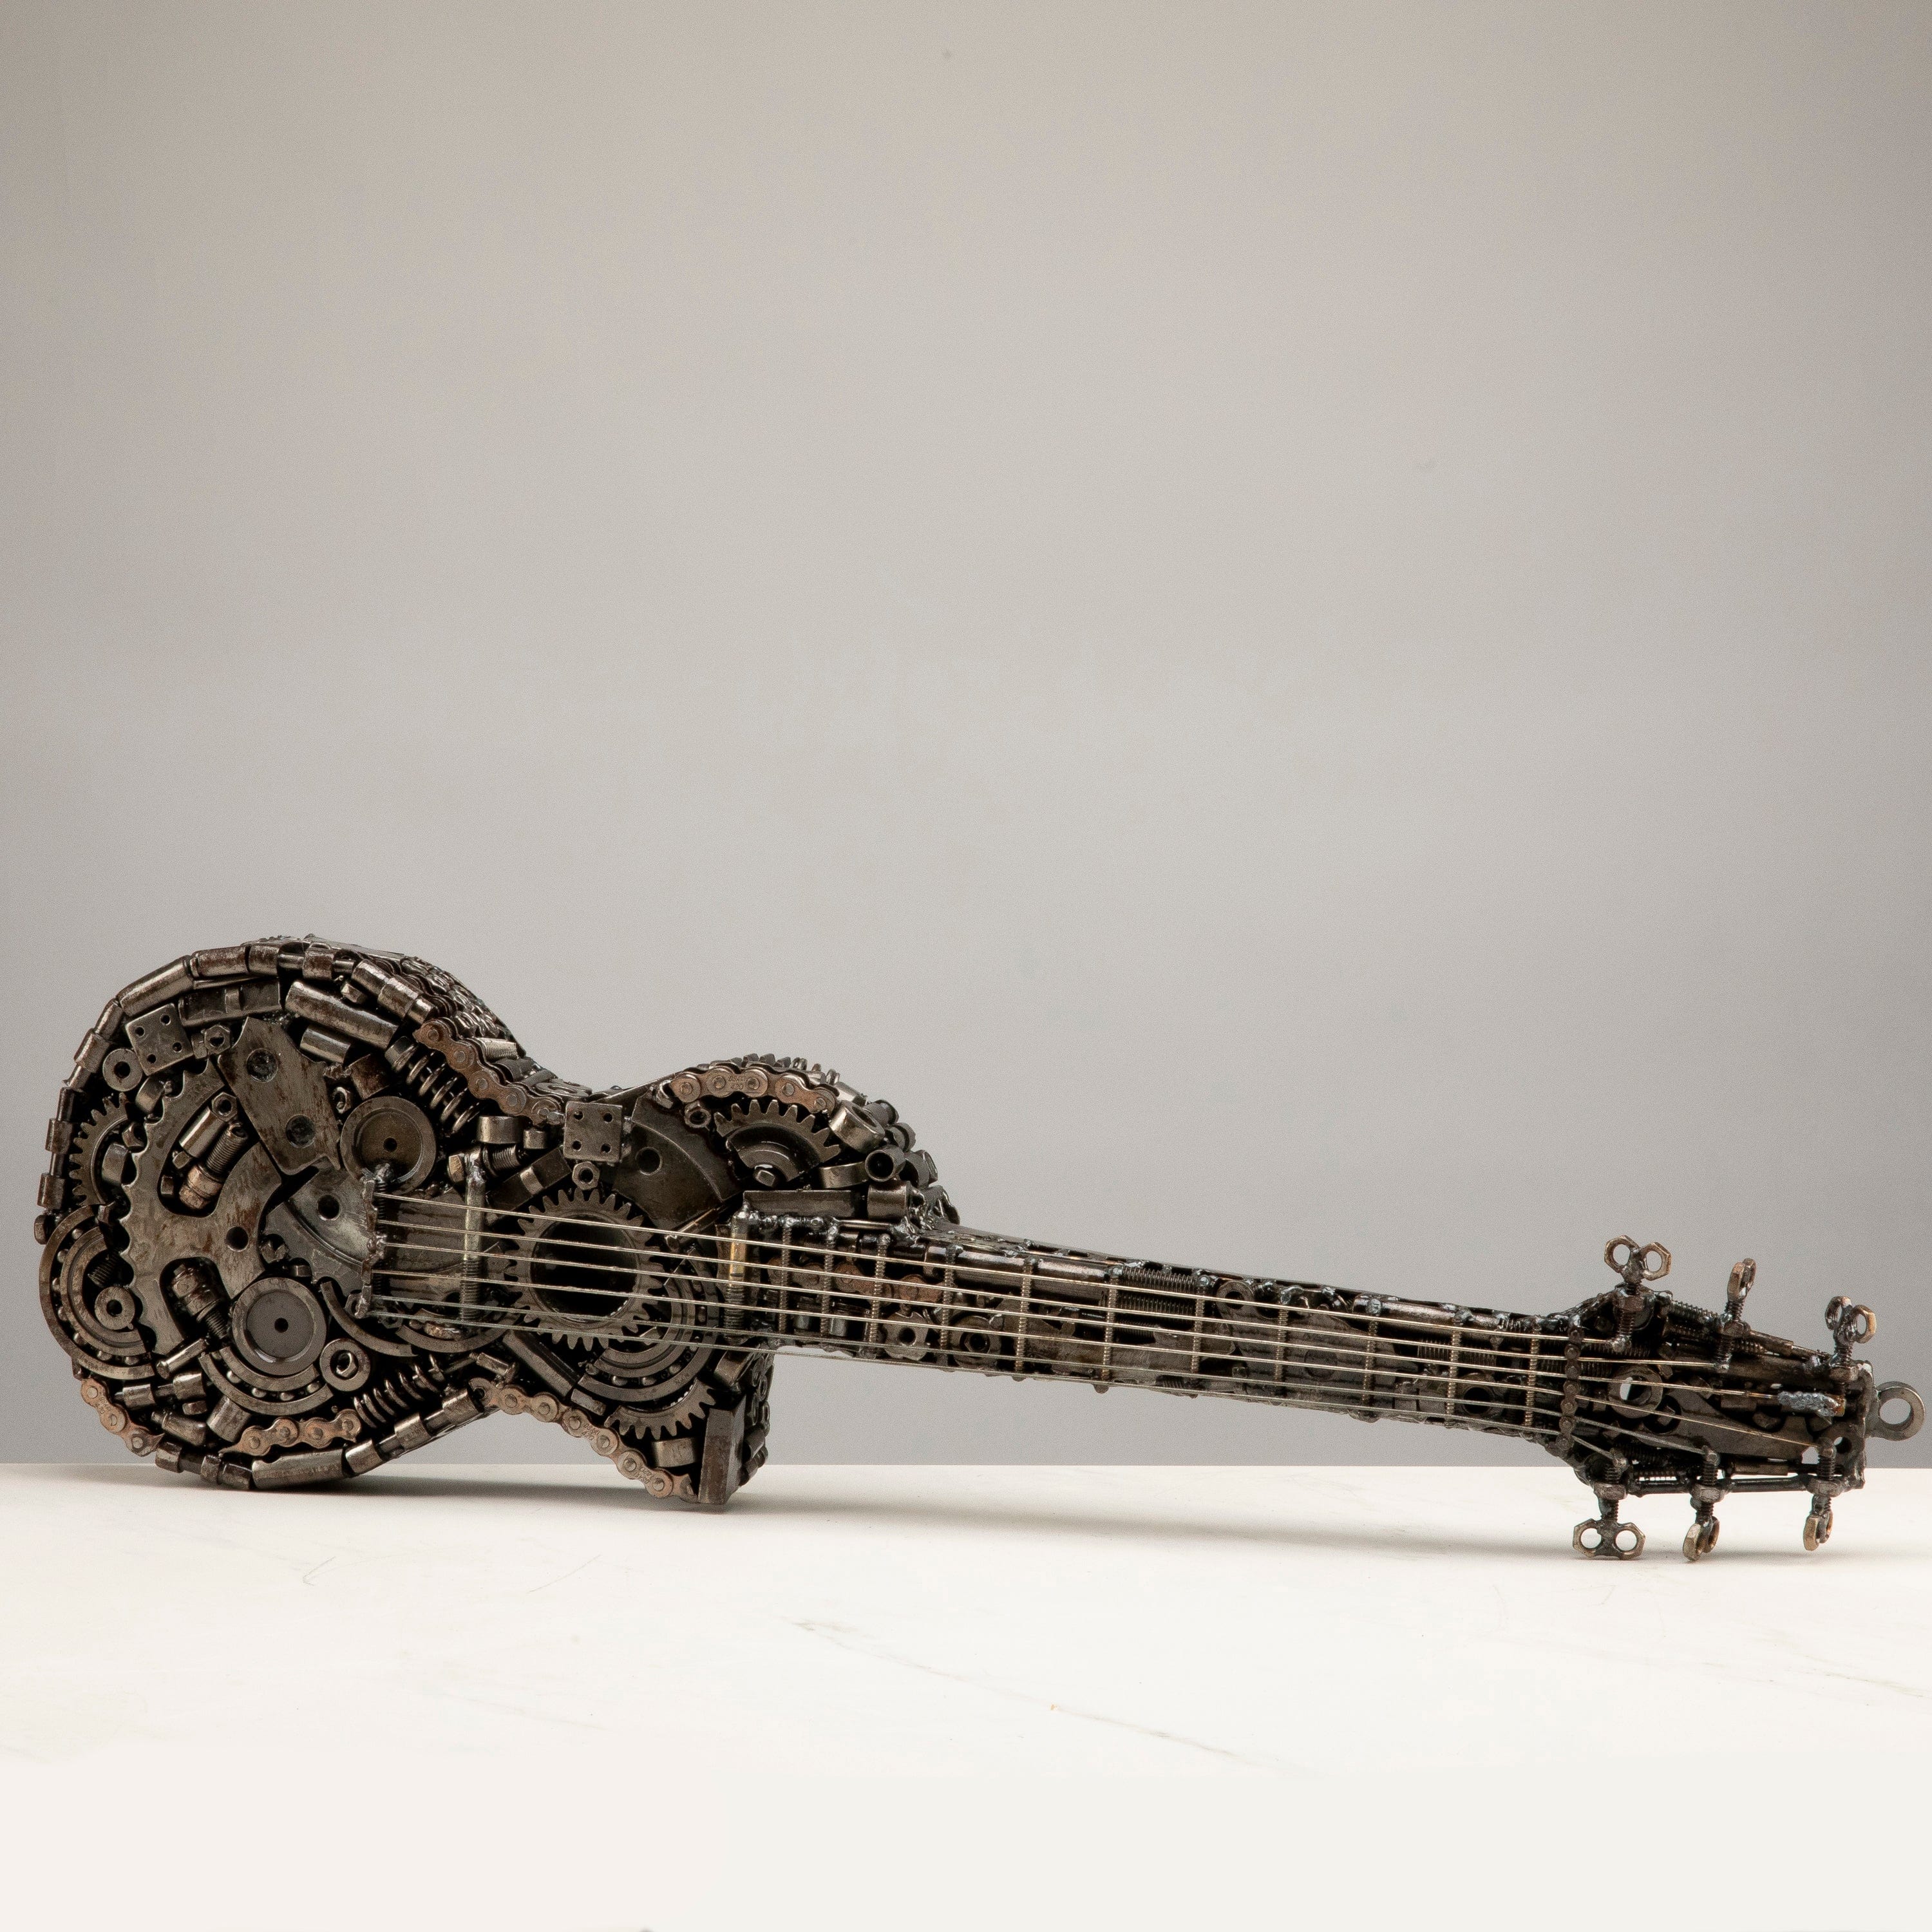 KALIFANO Recycled Metal Art 28" Guitar Inspired Recycled Metal Art Sculpture RMS-GT70-PK